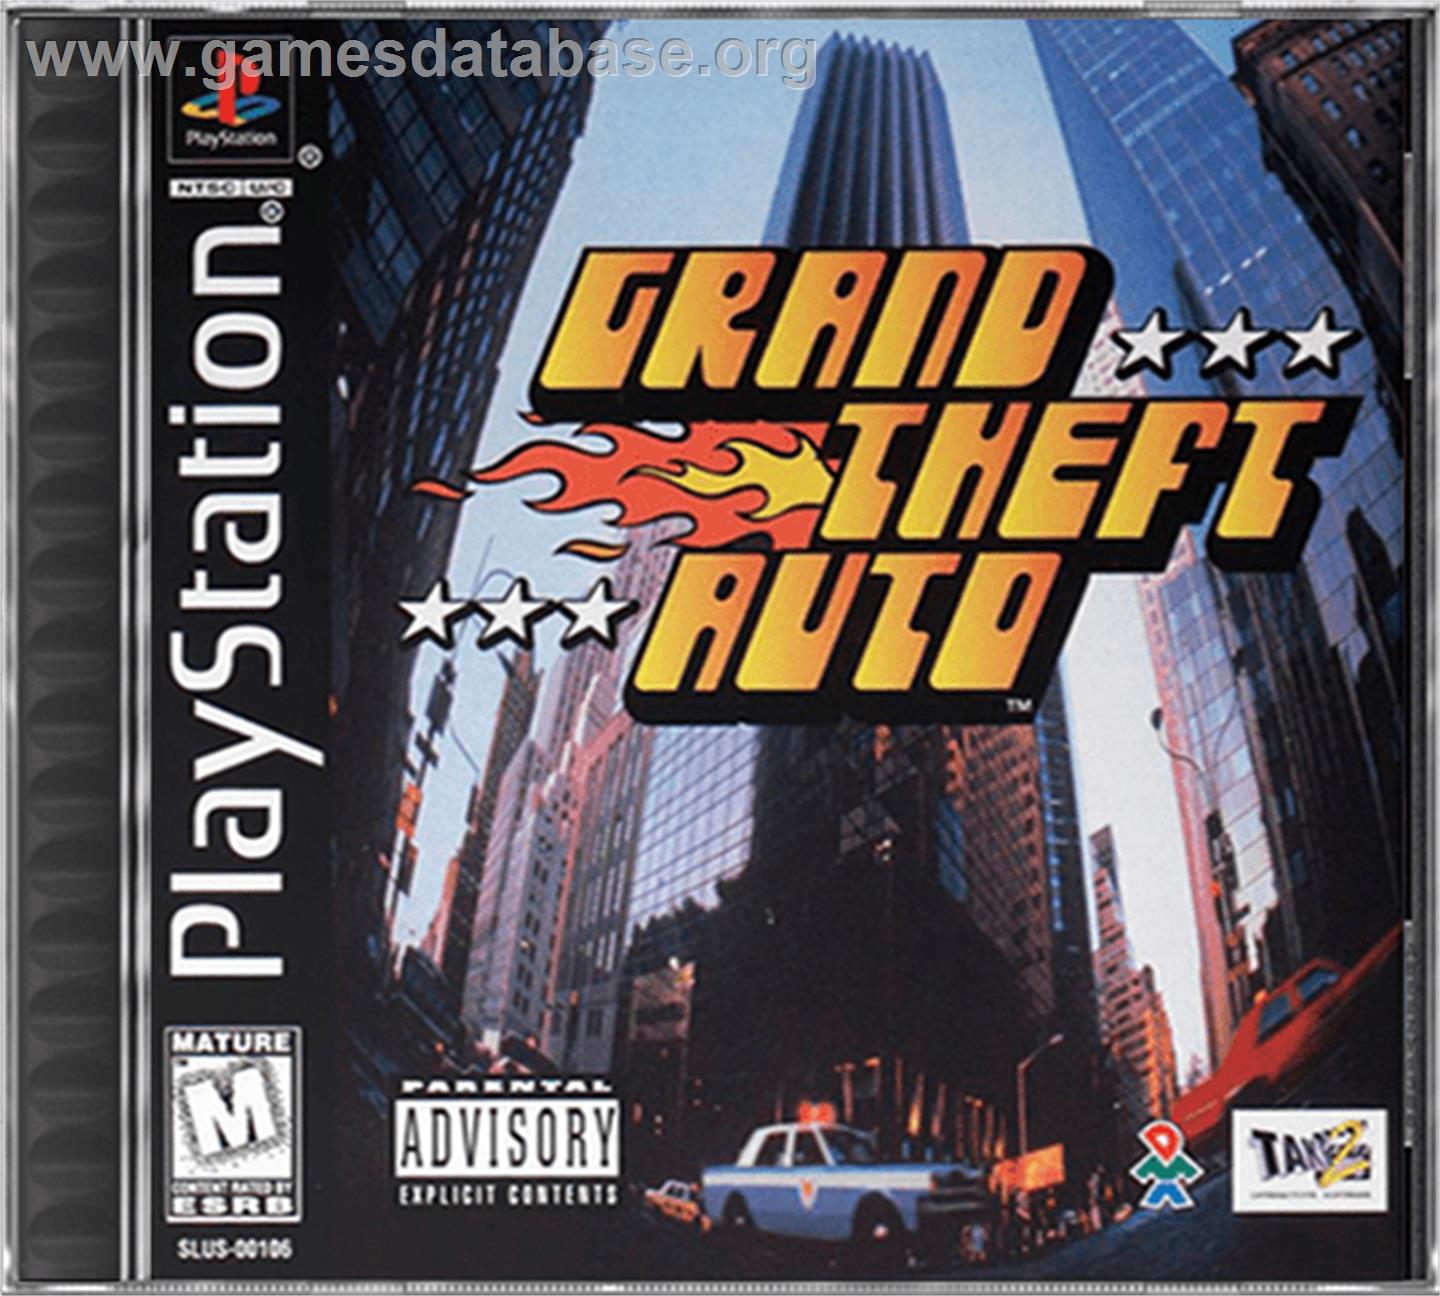 Grand Theft Auto - Sony Playstation - Artwork - Box